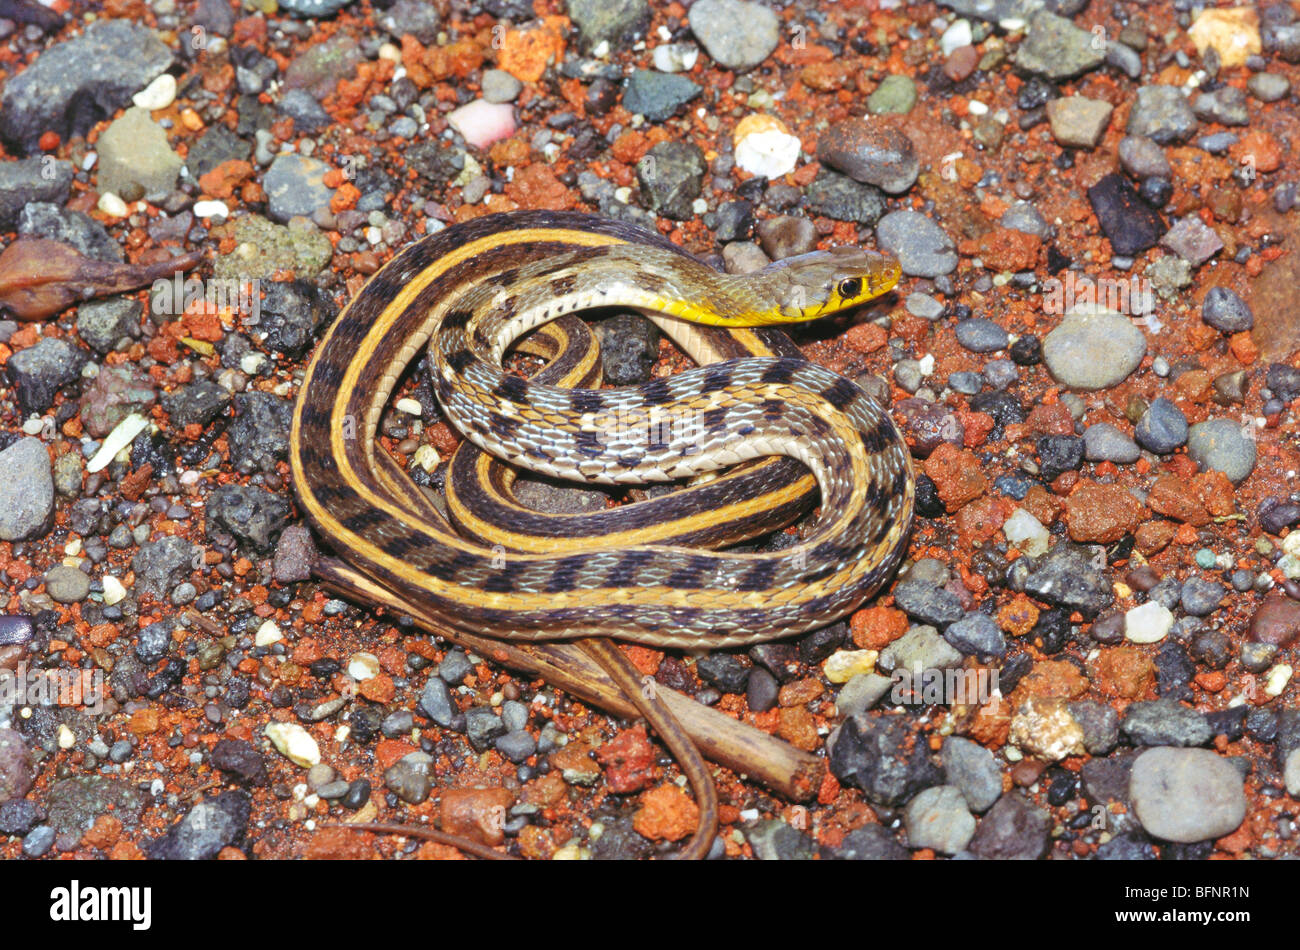 buff striped keelback snake ; Amphiesma stolatum ; Indian buff striped keelback snake ; amphiesma stolata ; india ; asia Stock Photo